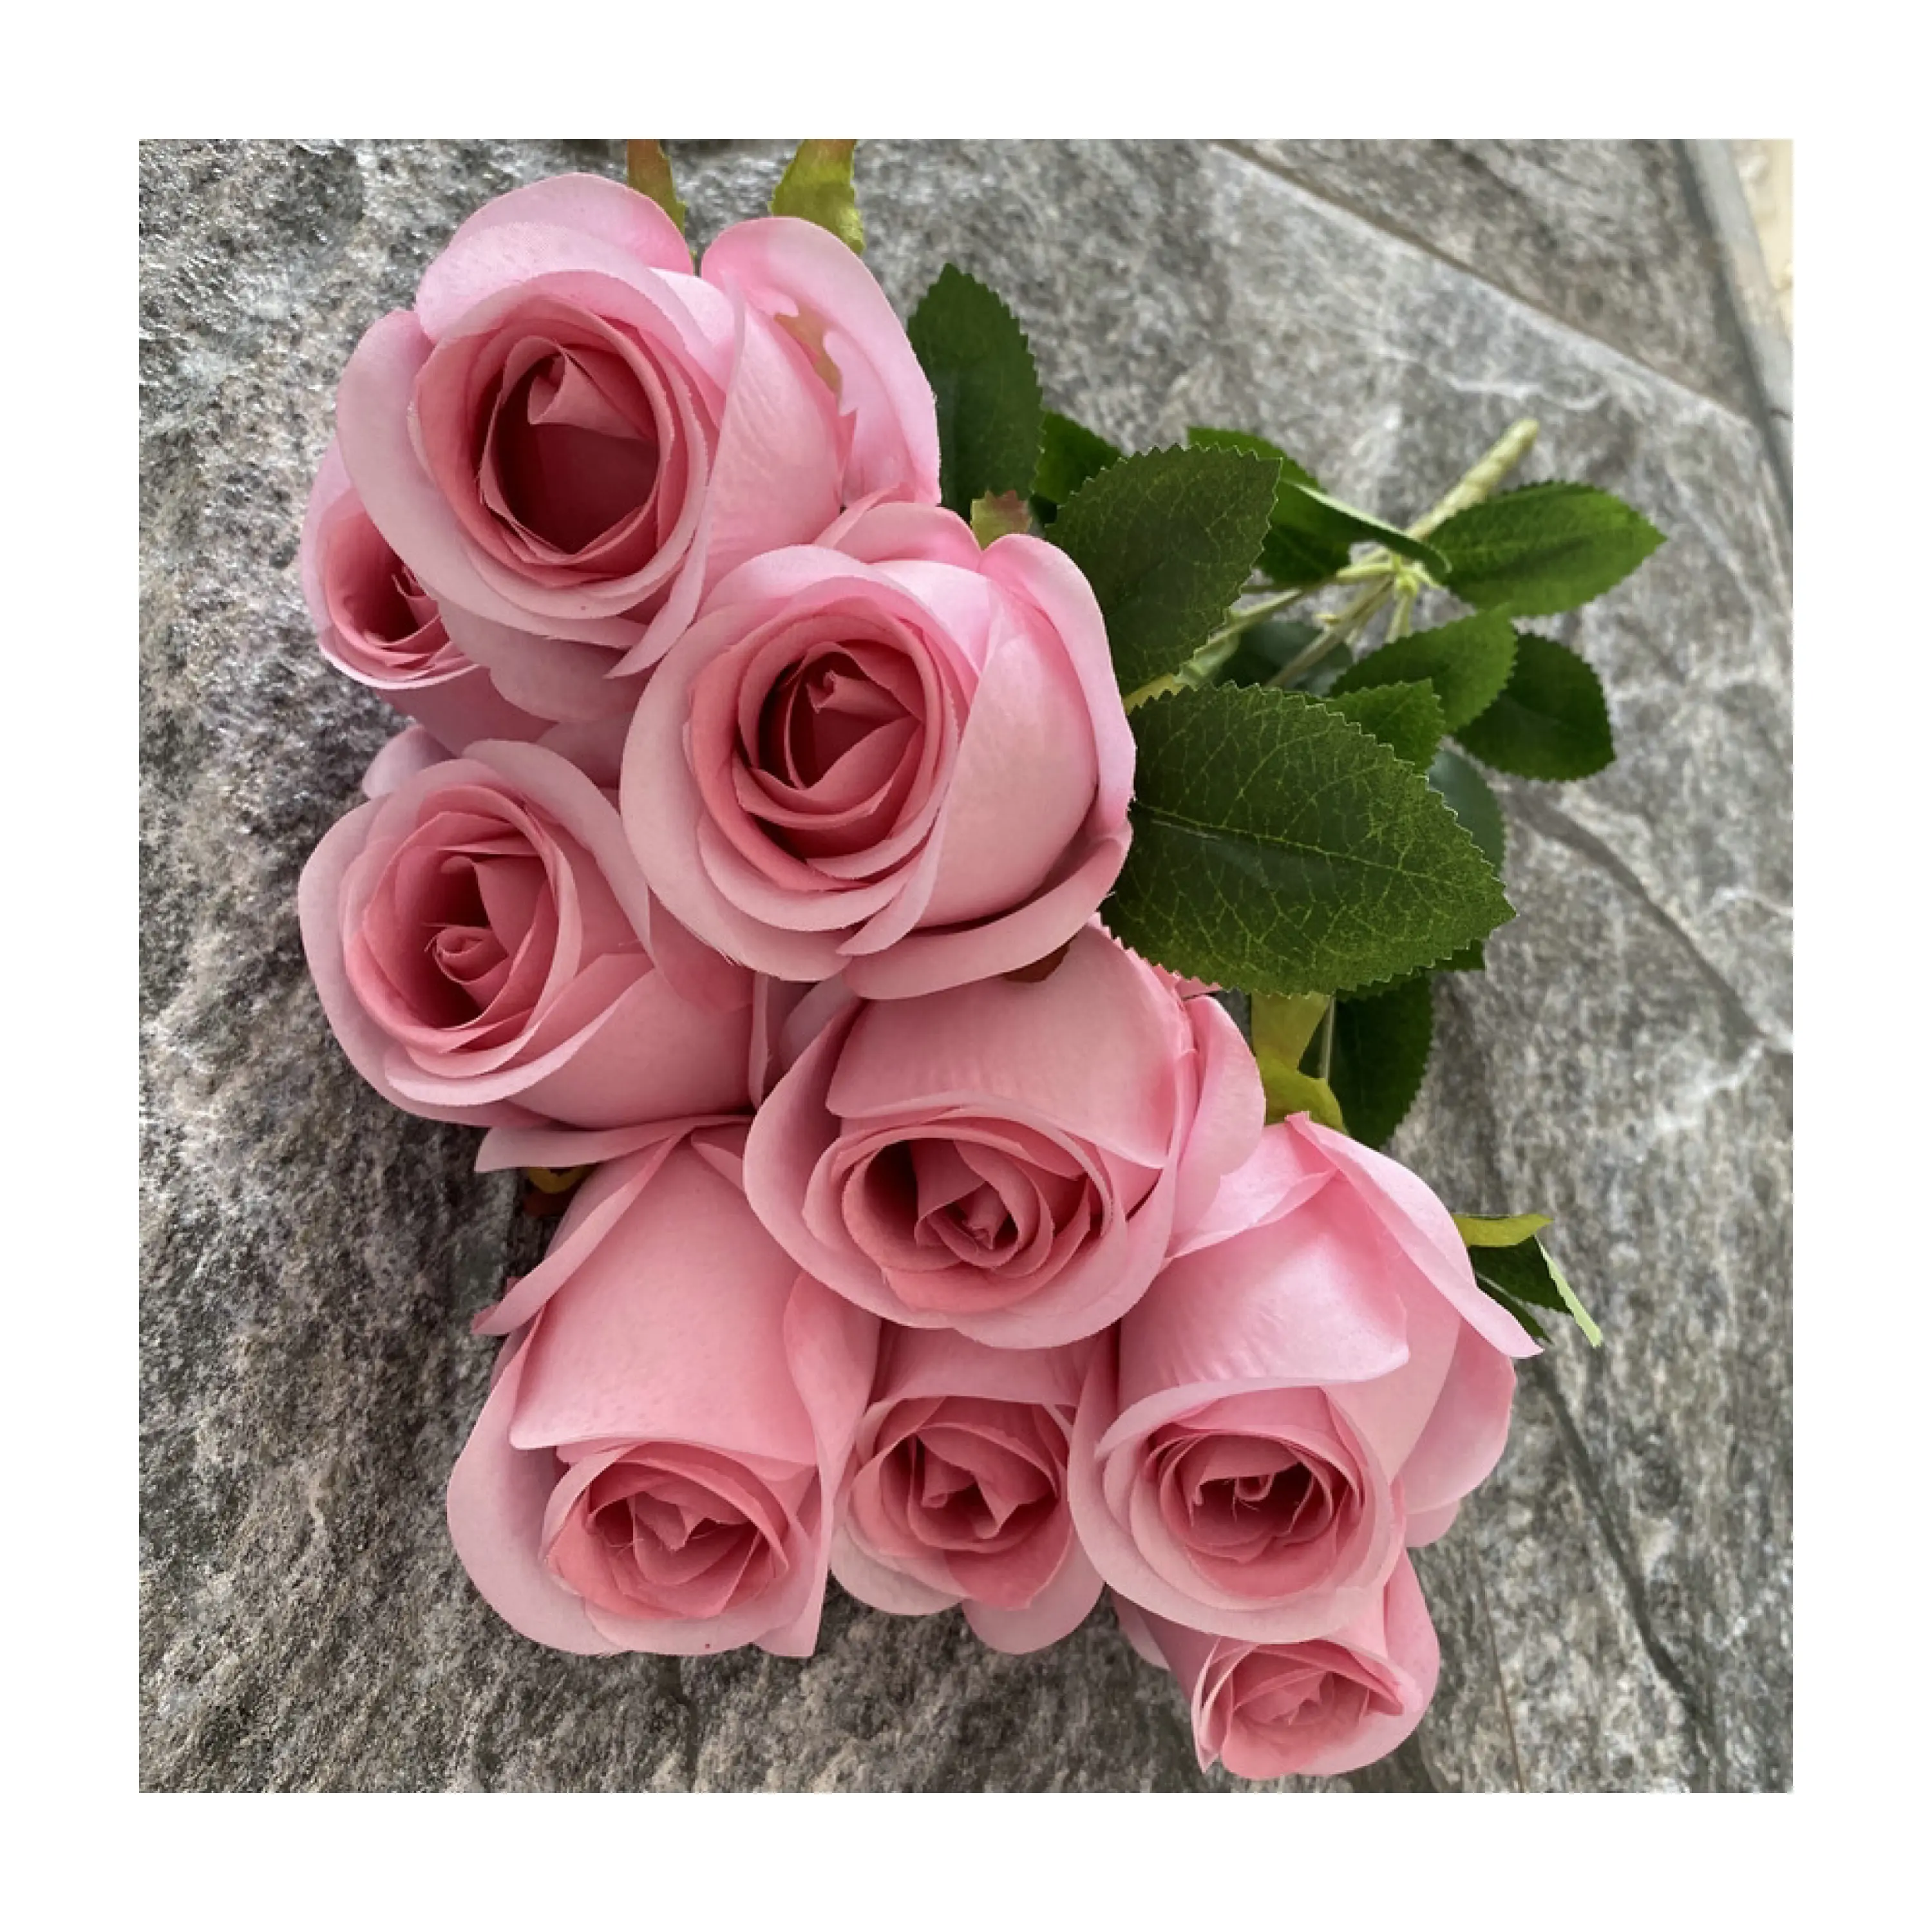 Rosa seda 9 cabezas flores artificiales ramo de rosas imitación Mini ramo de rosas flor ramo de novia decorar flores para boda